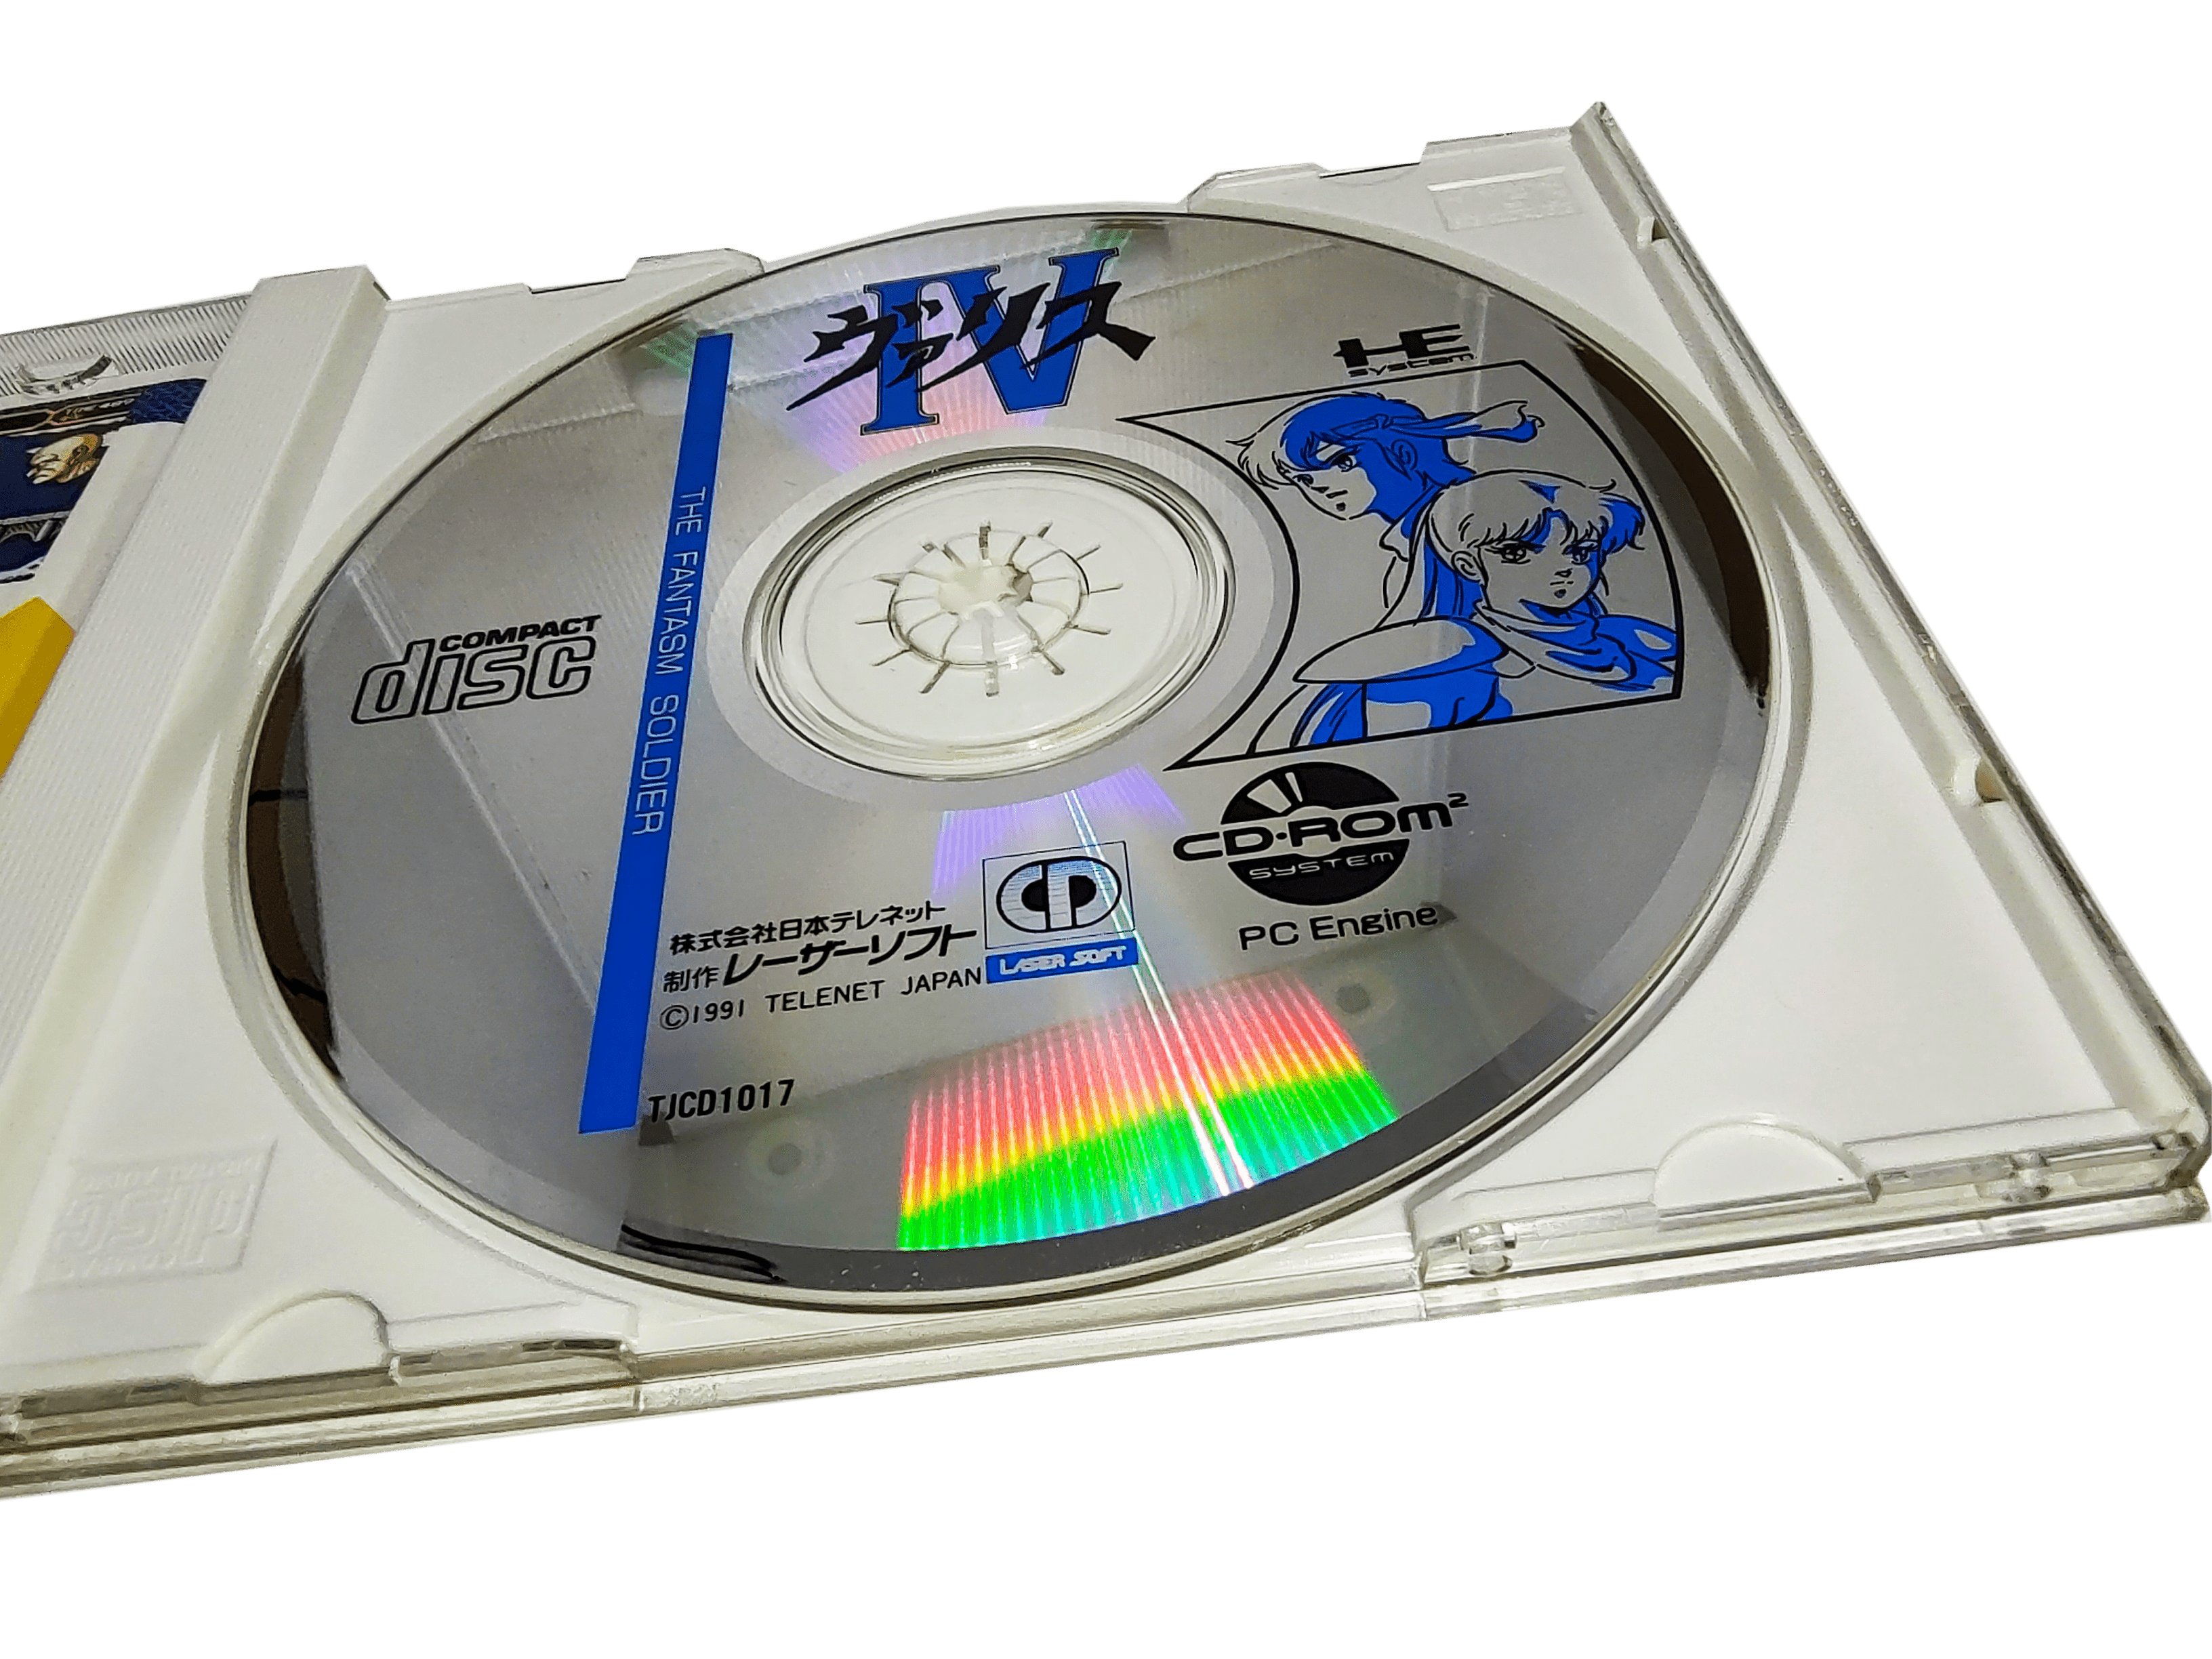 Valis IV: The Phantasm Soldier | PC Engine | Game Disc